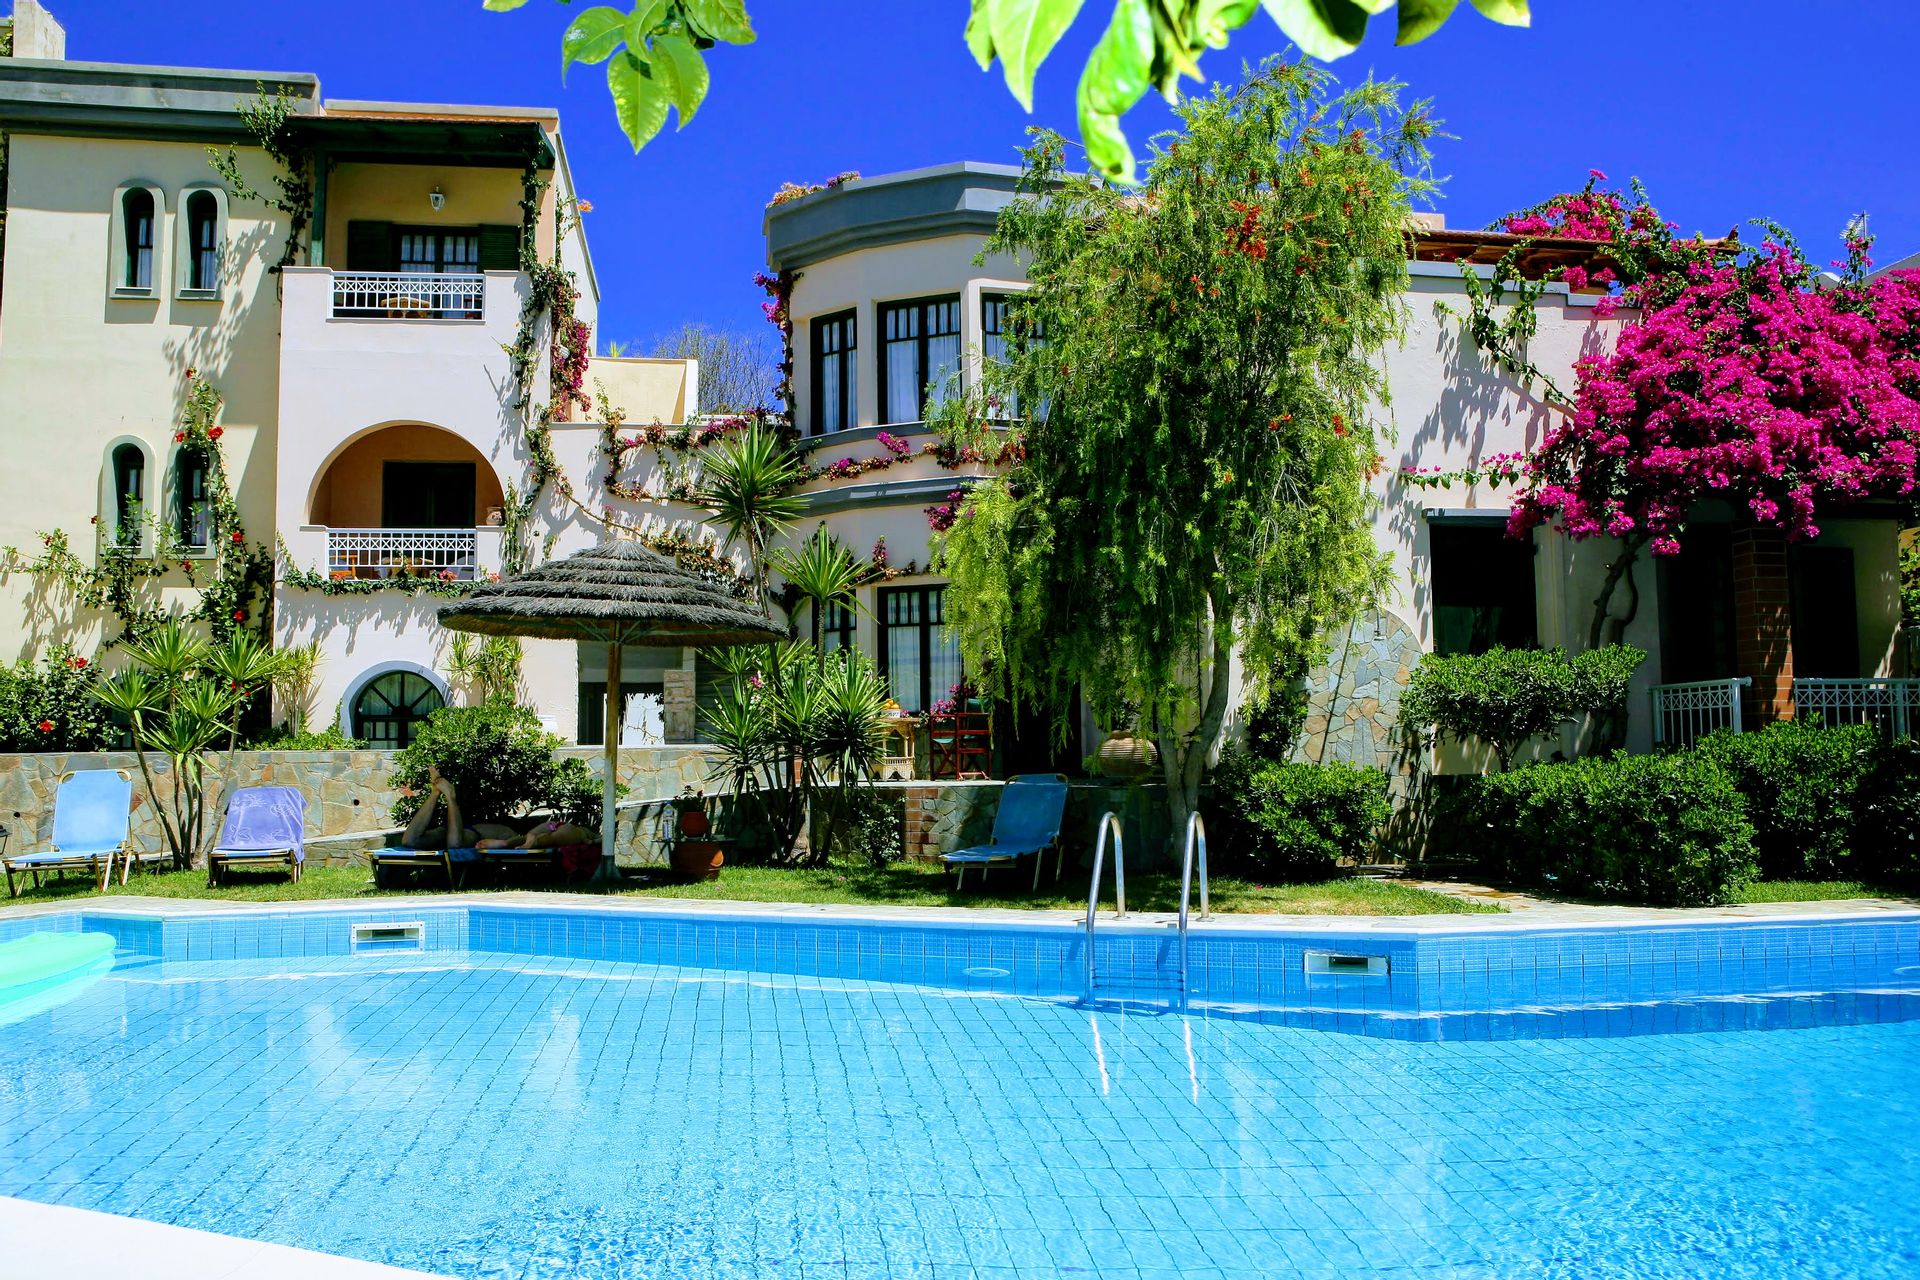 Aquarius Exclusive Apartments - Ηράκλειο, Κρήτη ✦ 3 Ημέρες (2 Διανυκτερεύσεις) ✦ 2 άτομα ✦ 2 ✦ 15/04/2022 έως 30/09/2022 ✦ Κοντά στην παραλία!